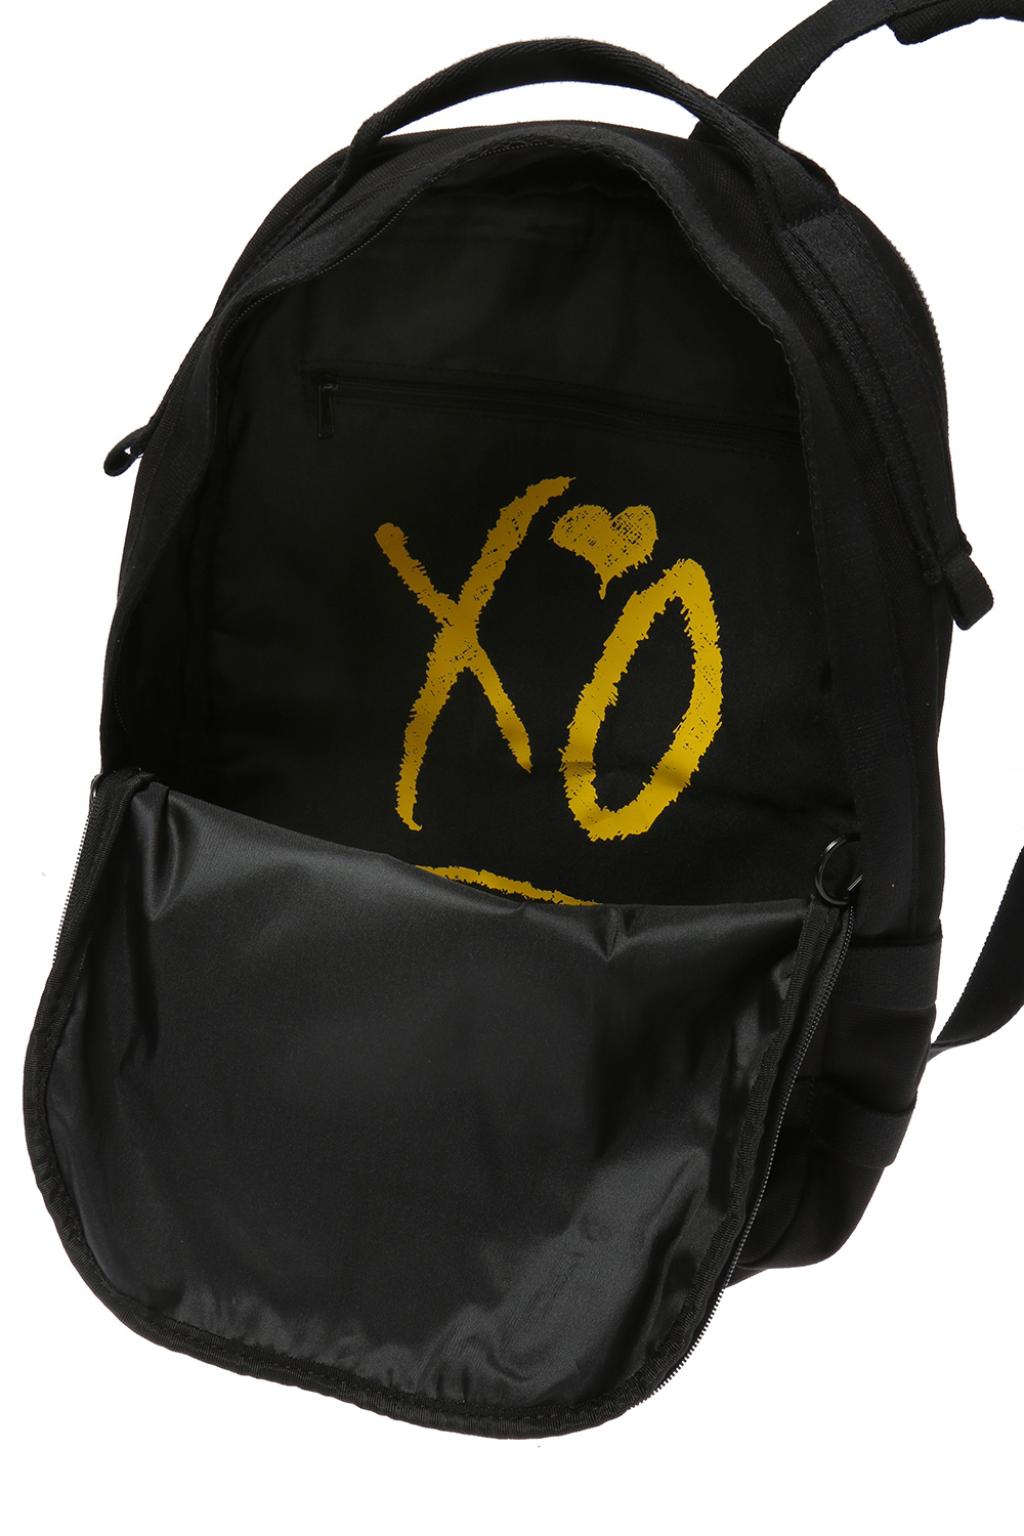 Puma XO by Weeknd backpack | Men's Bags |